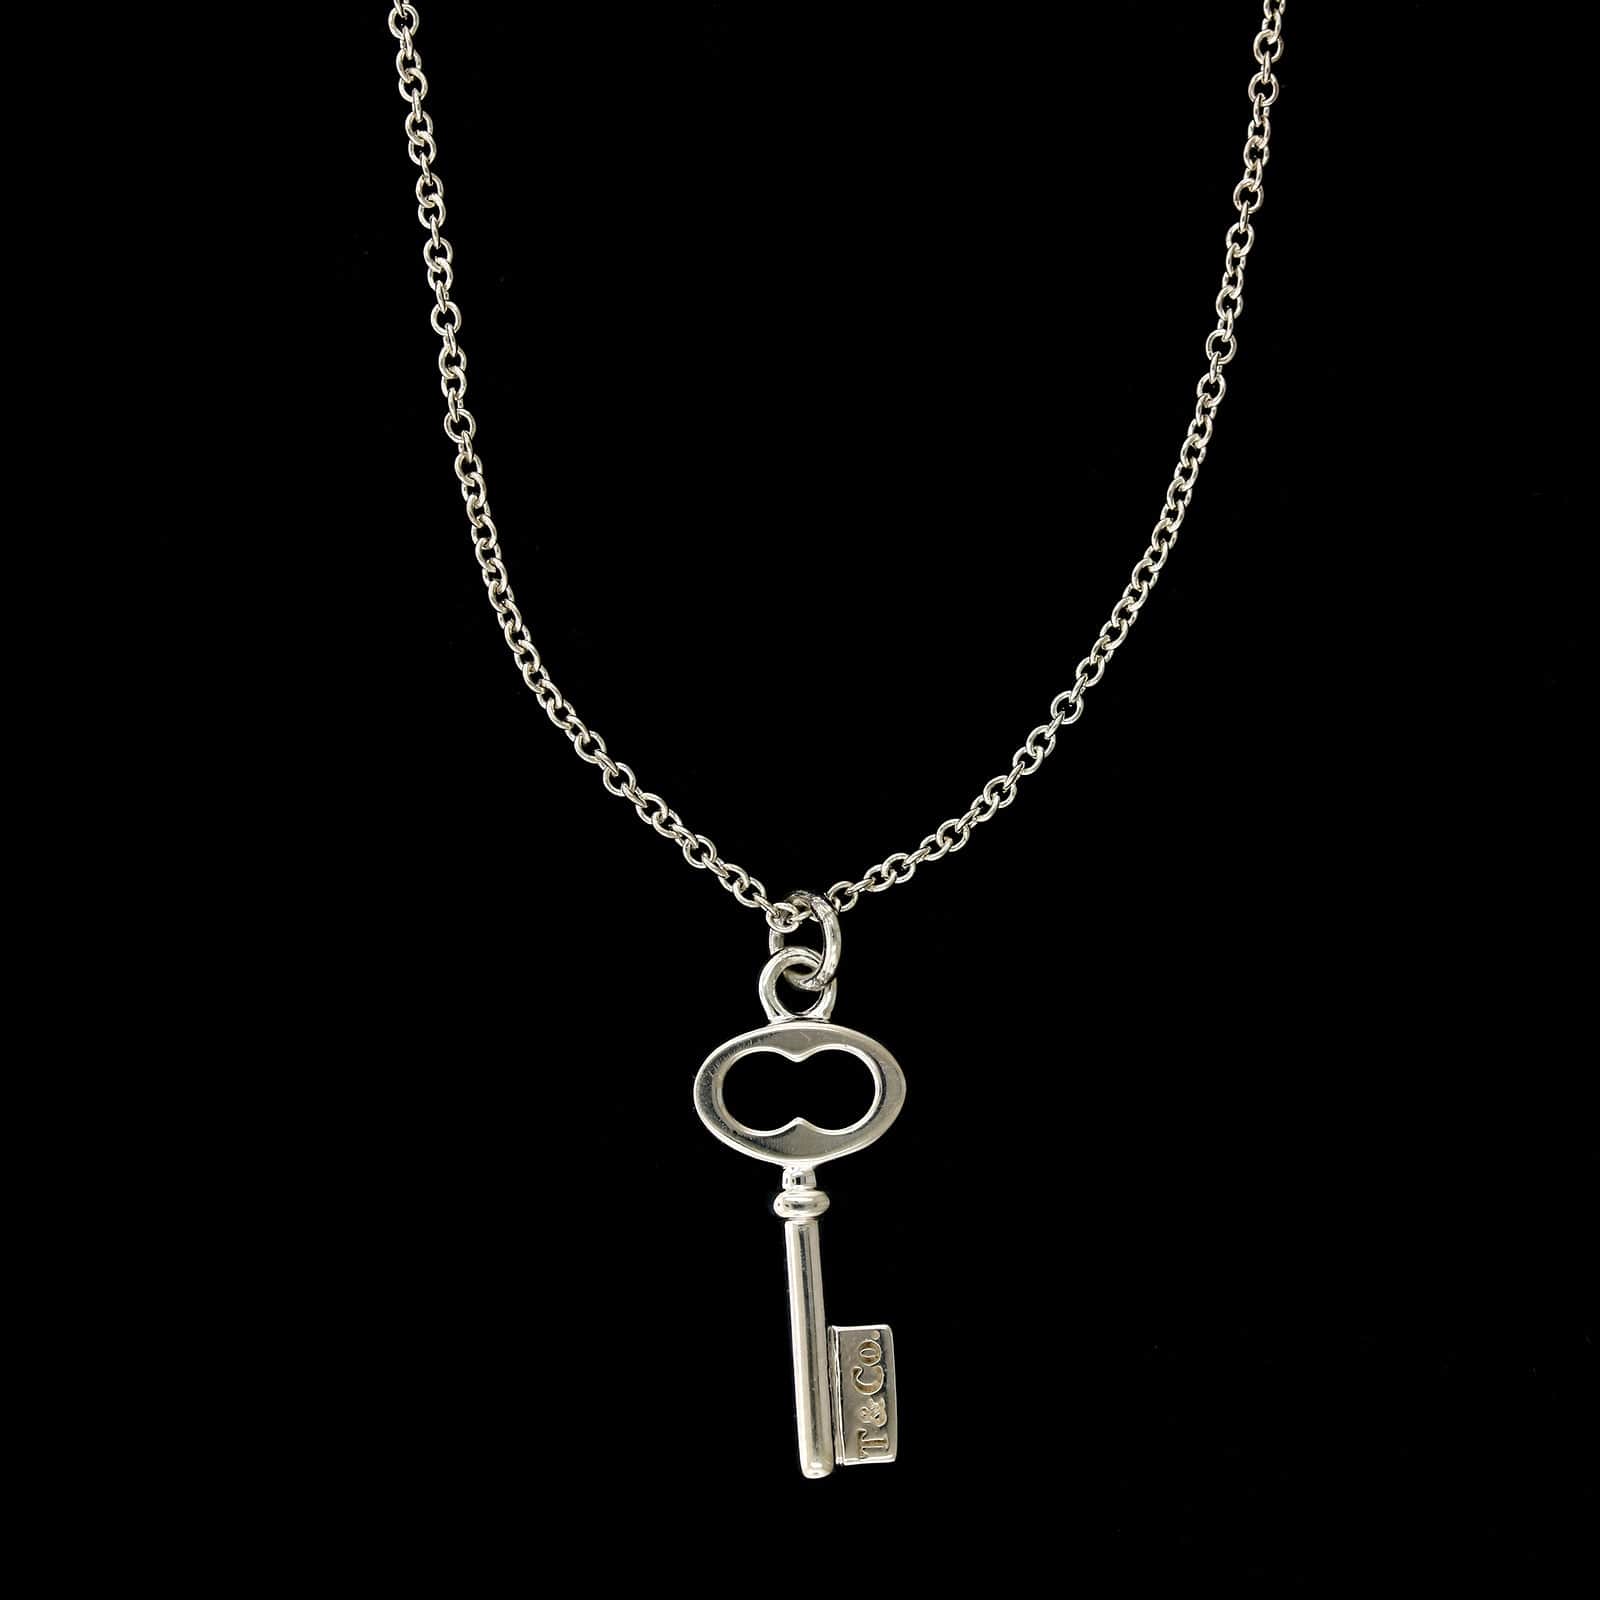 Tiffany & Co. Estate Sterling Silver Key Pendant